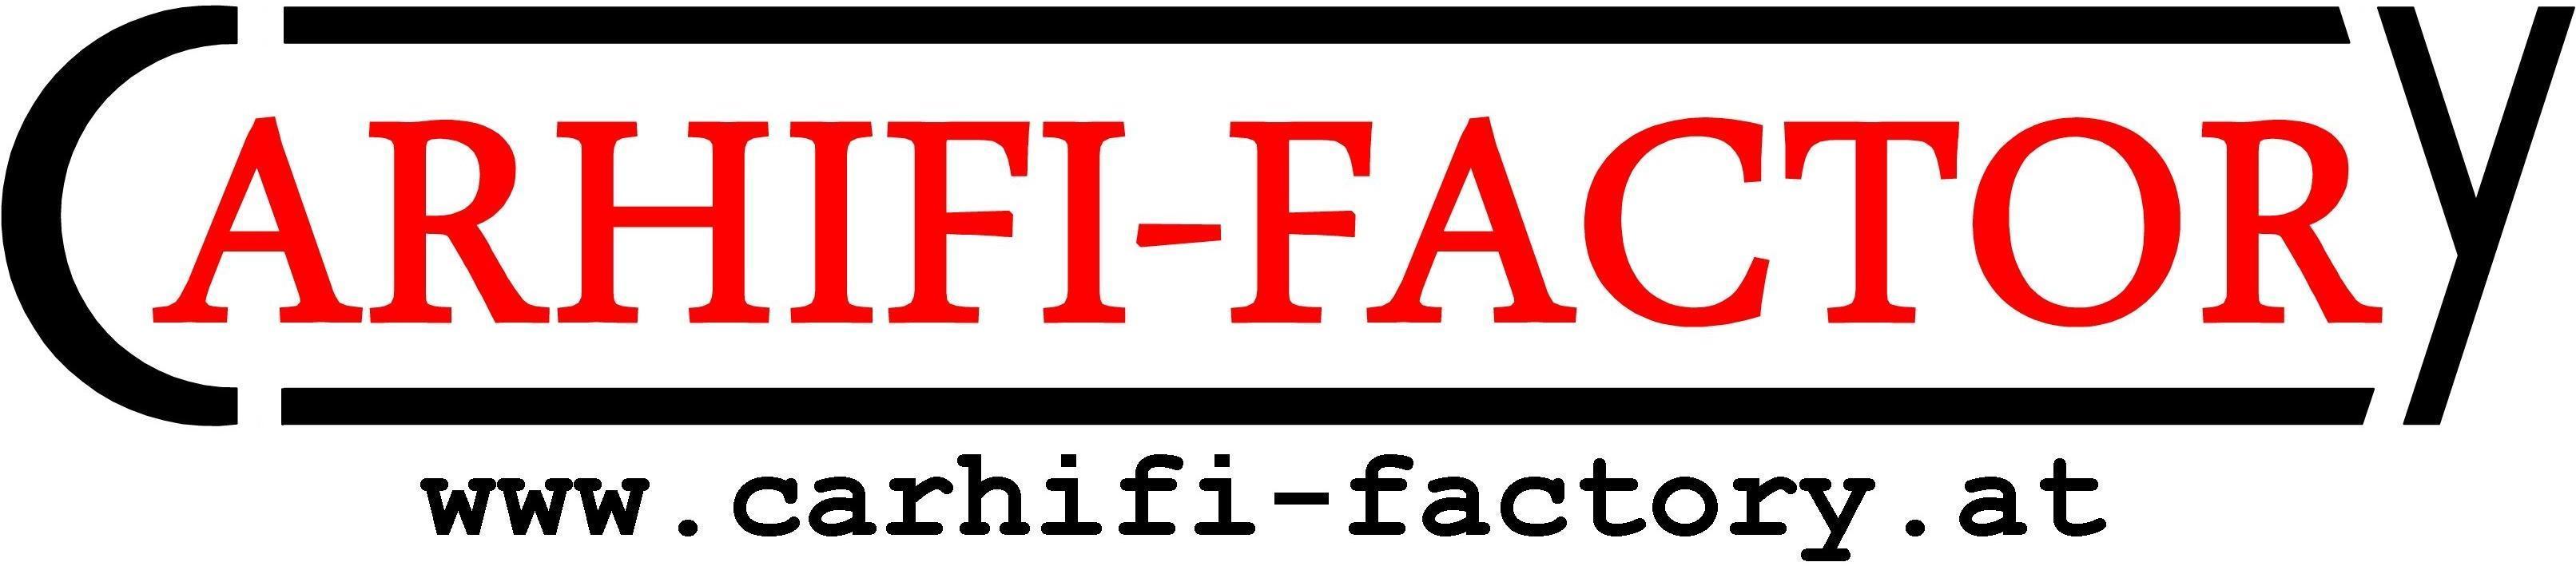 Logo CARHIFI - FACTORY